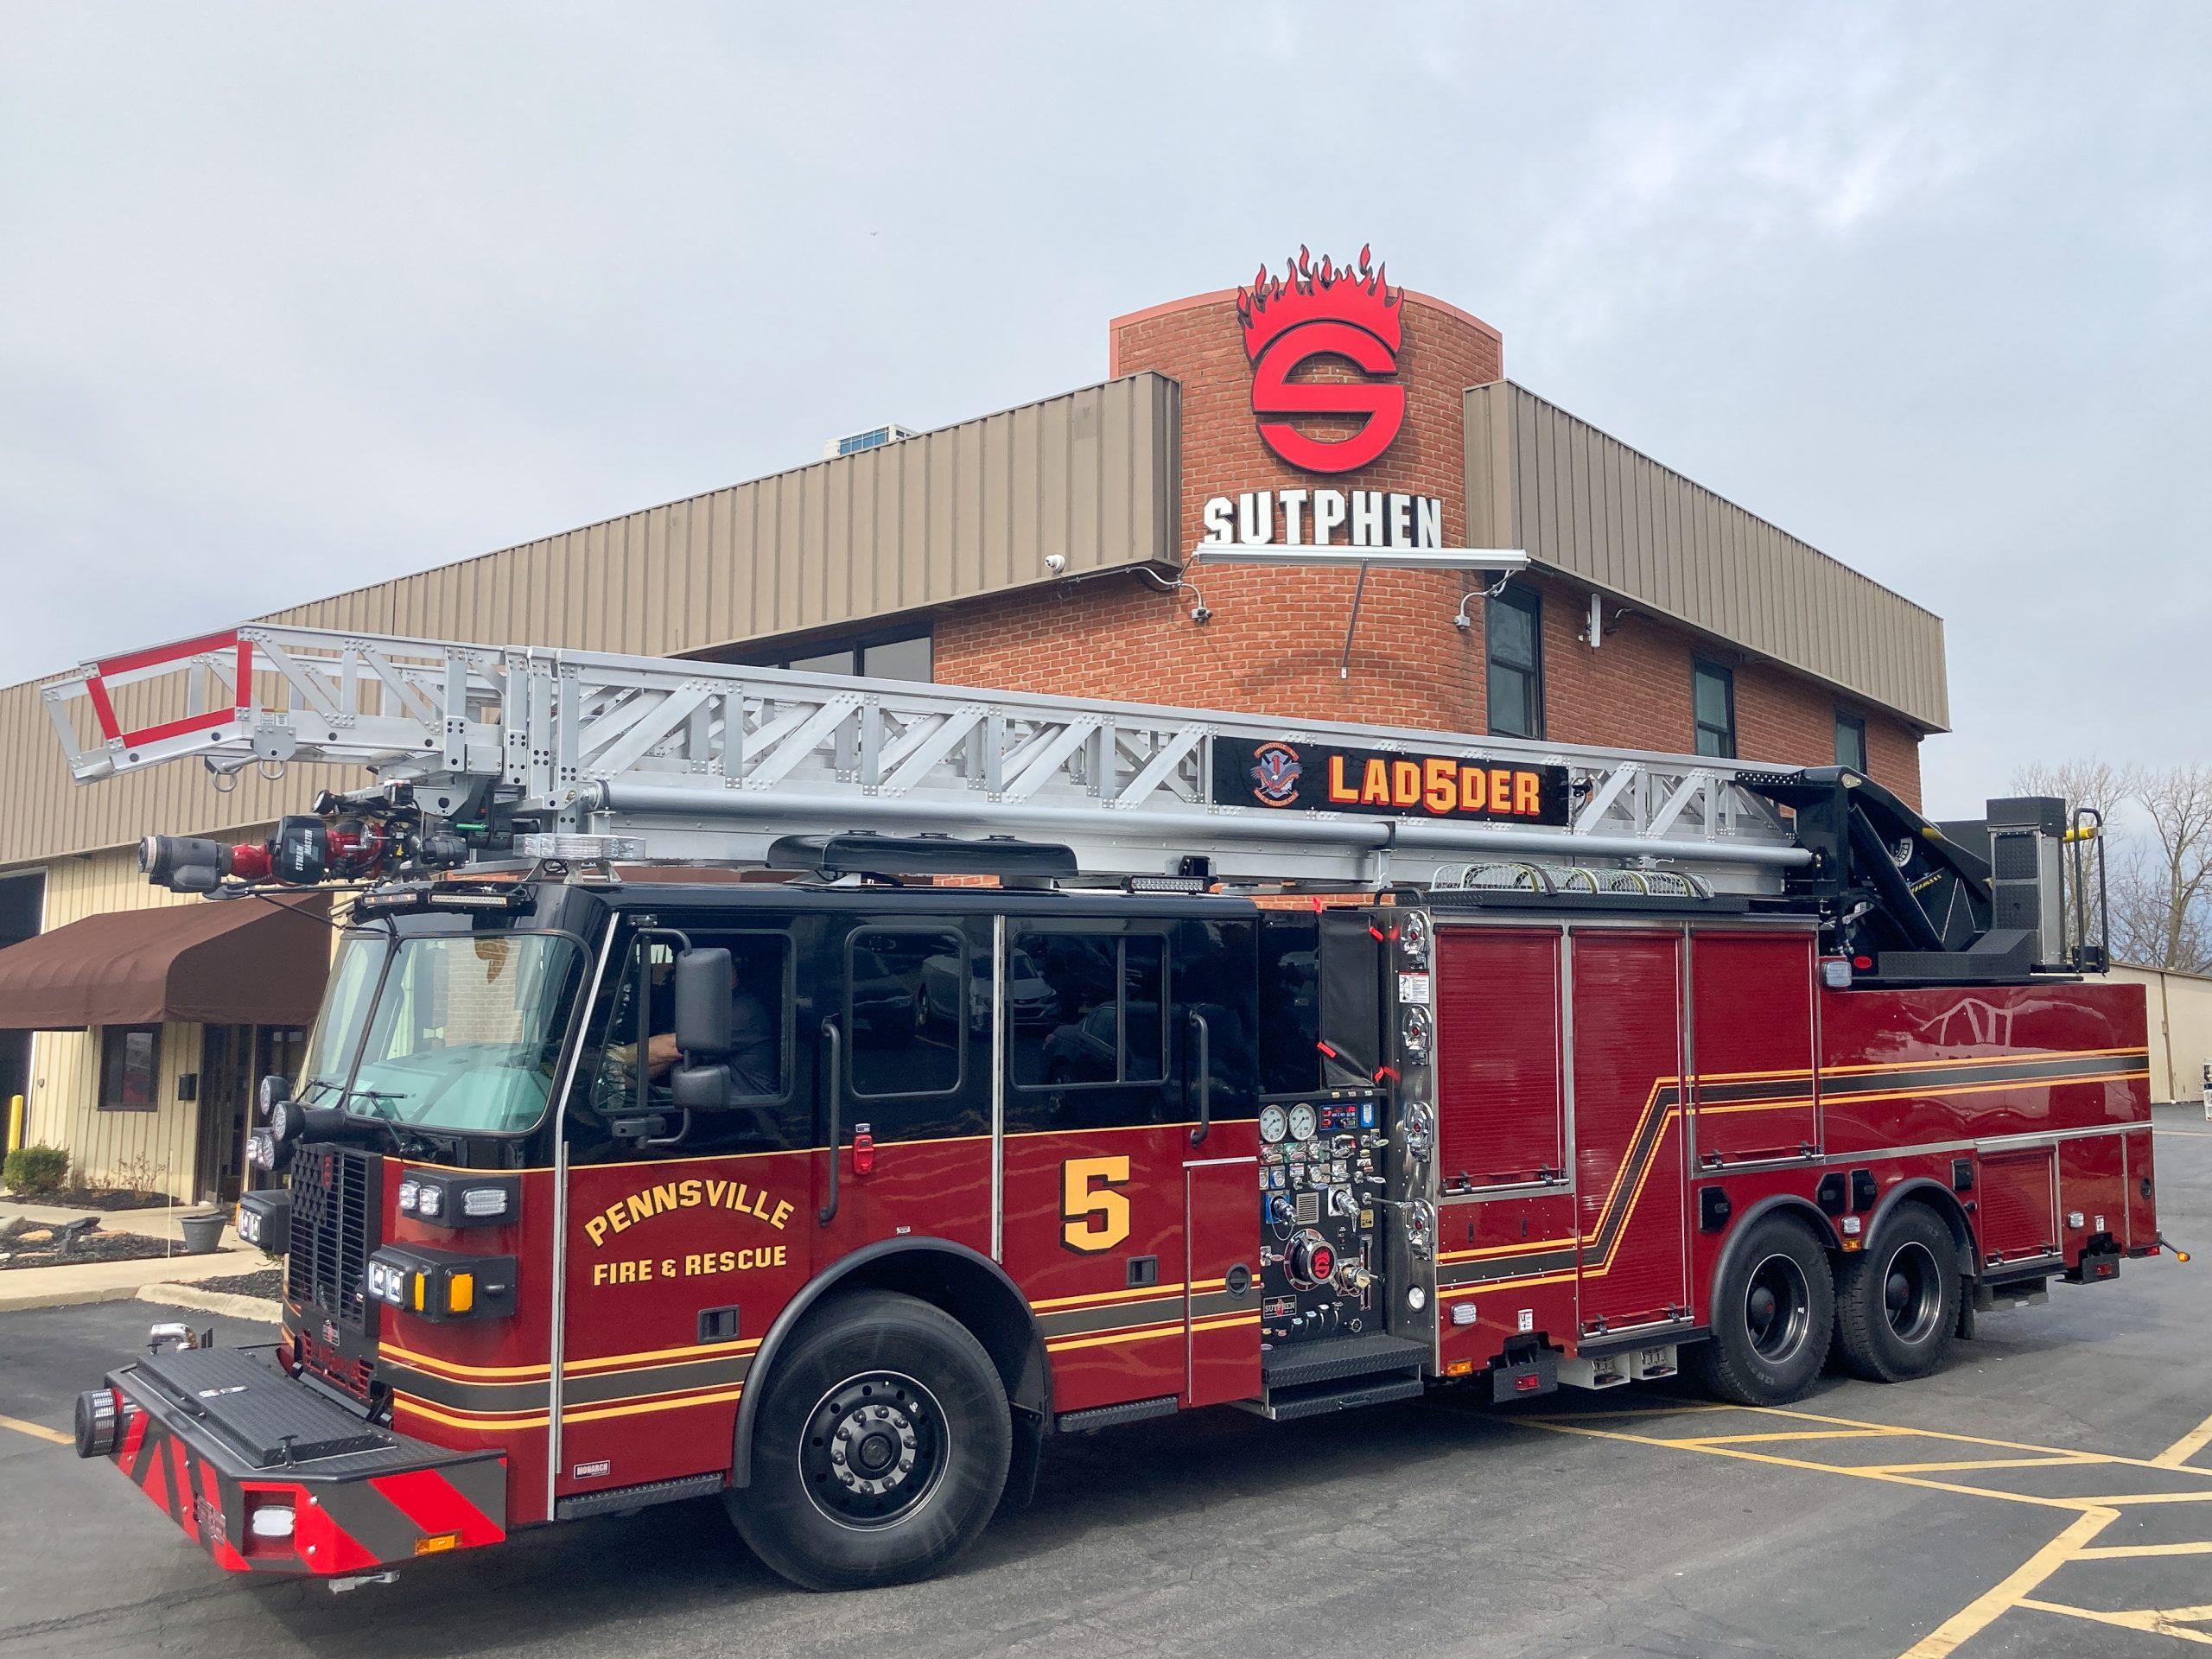 Pennsville Fire & Rescue